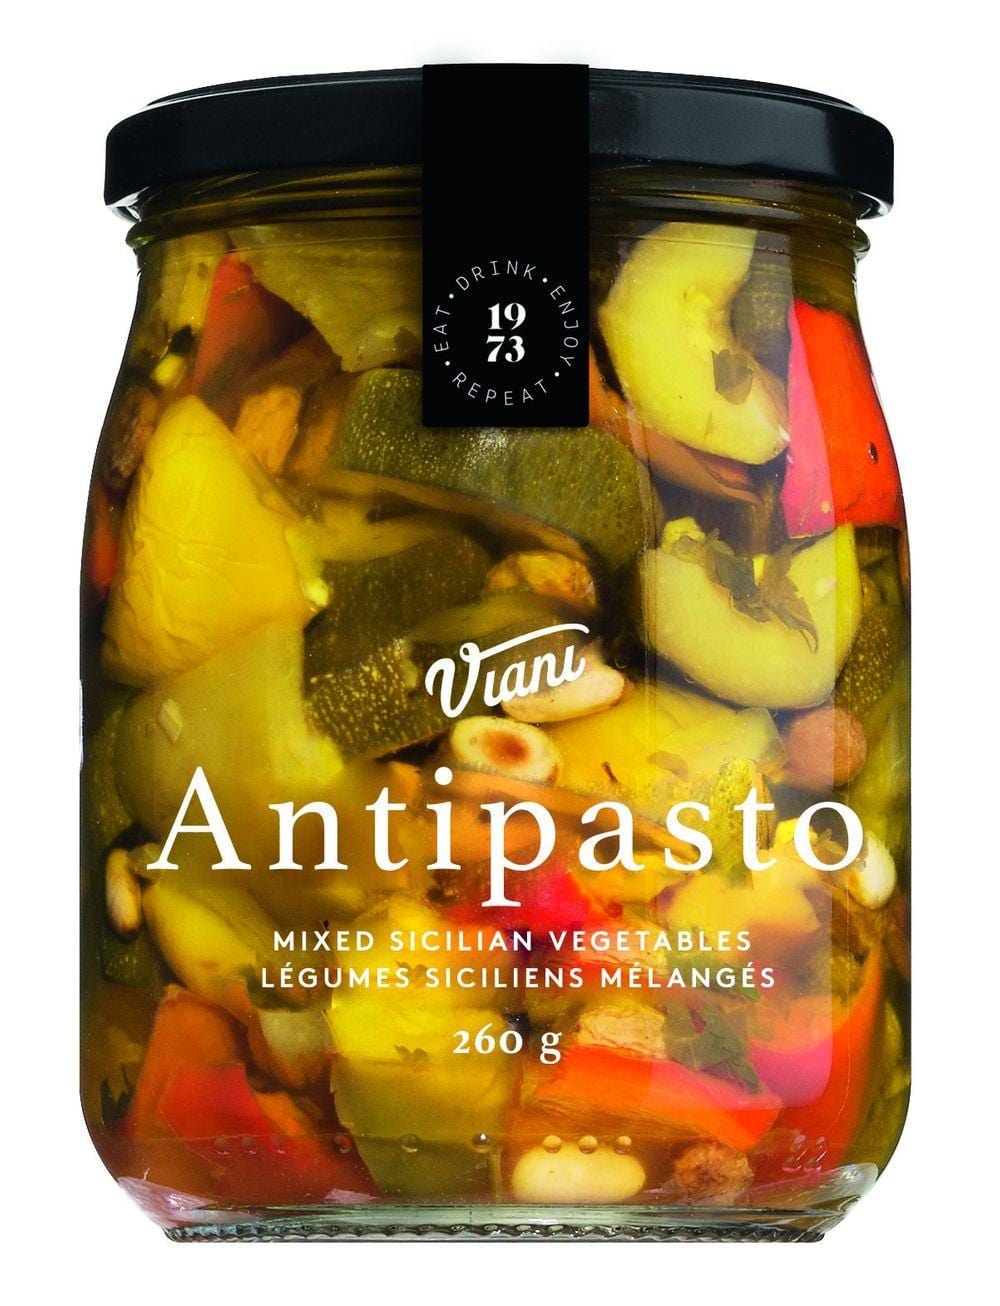 Antipasto Mixed Sicilian Vegetables 260g
Viani